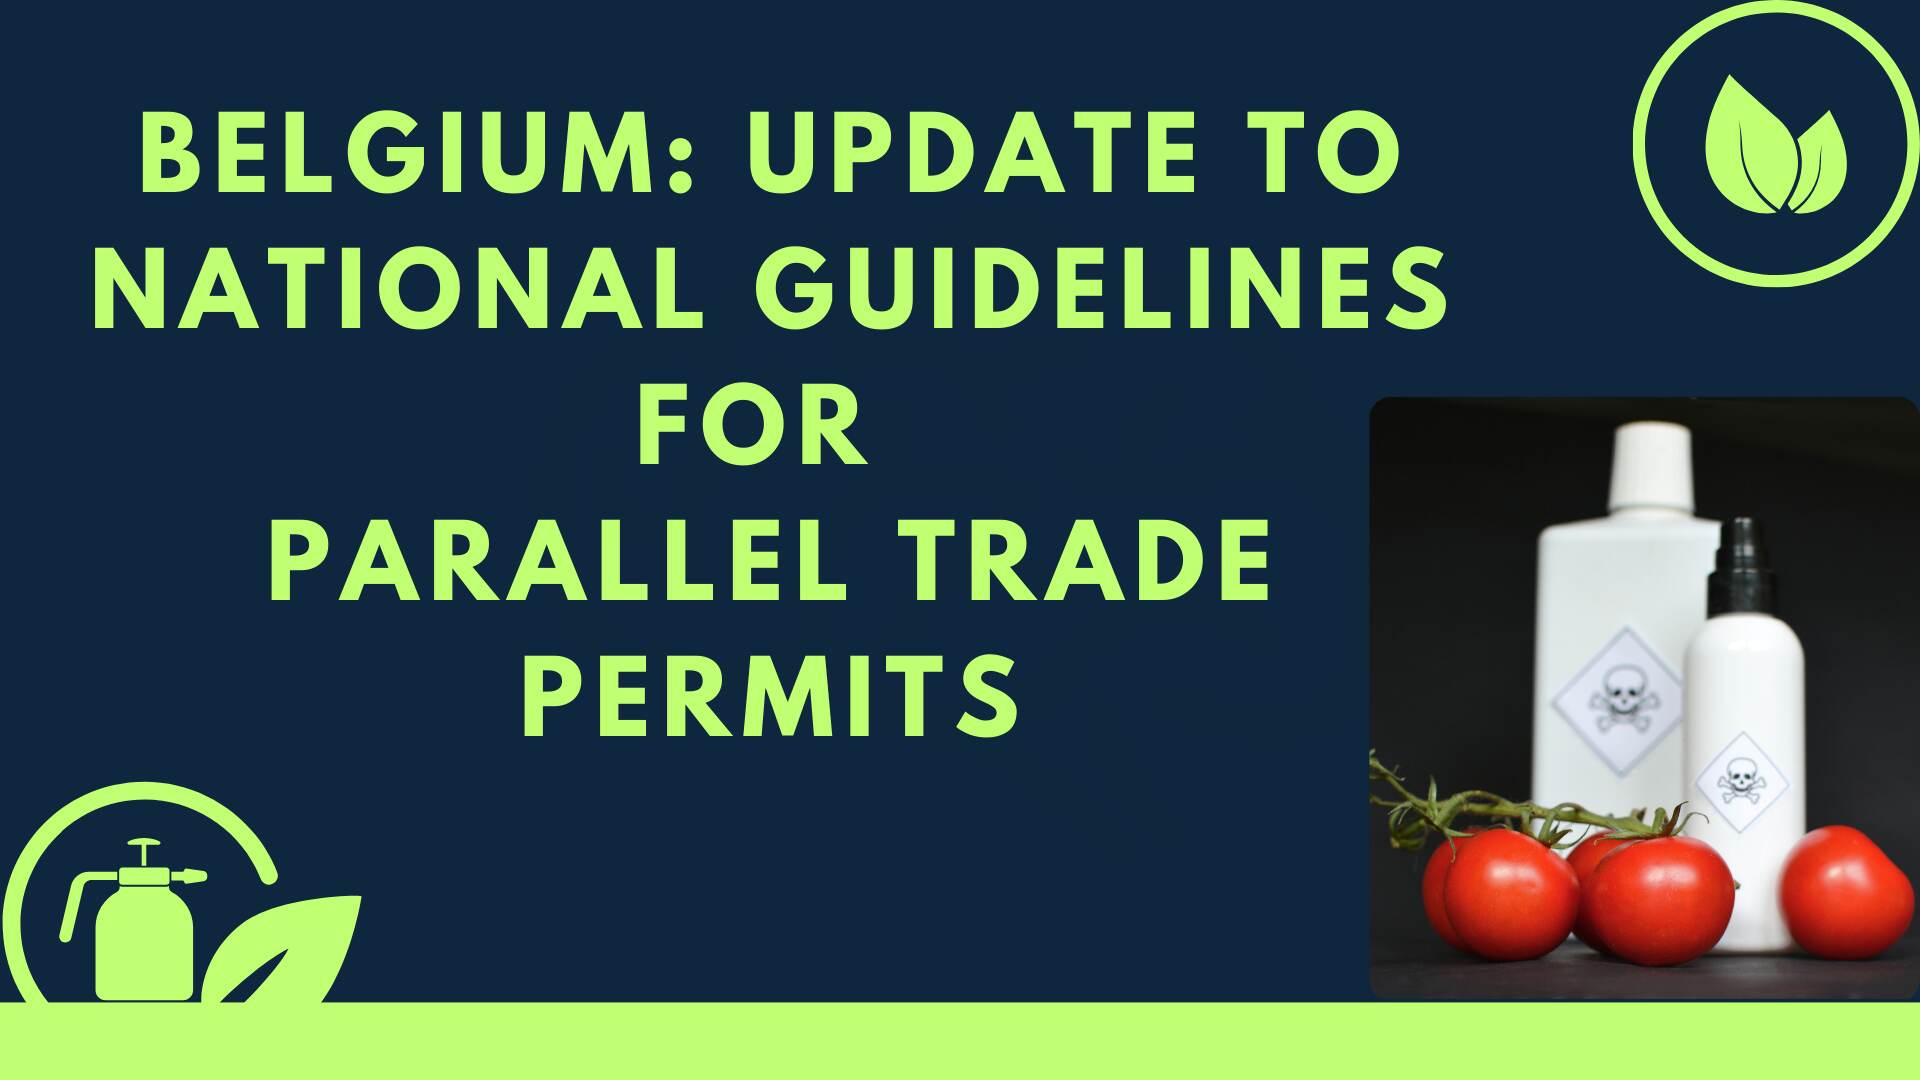 Belgium Parallel Trade Permit Guidelines Update